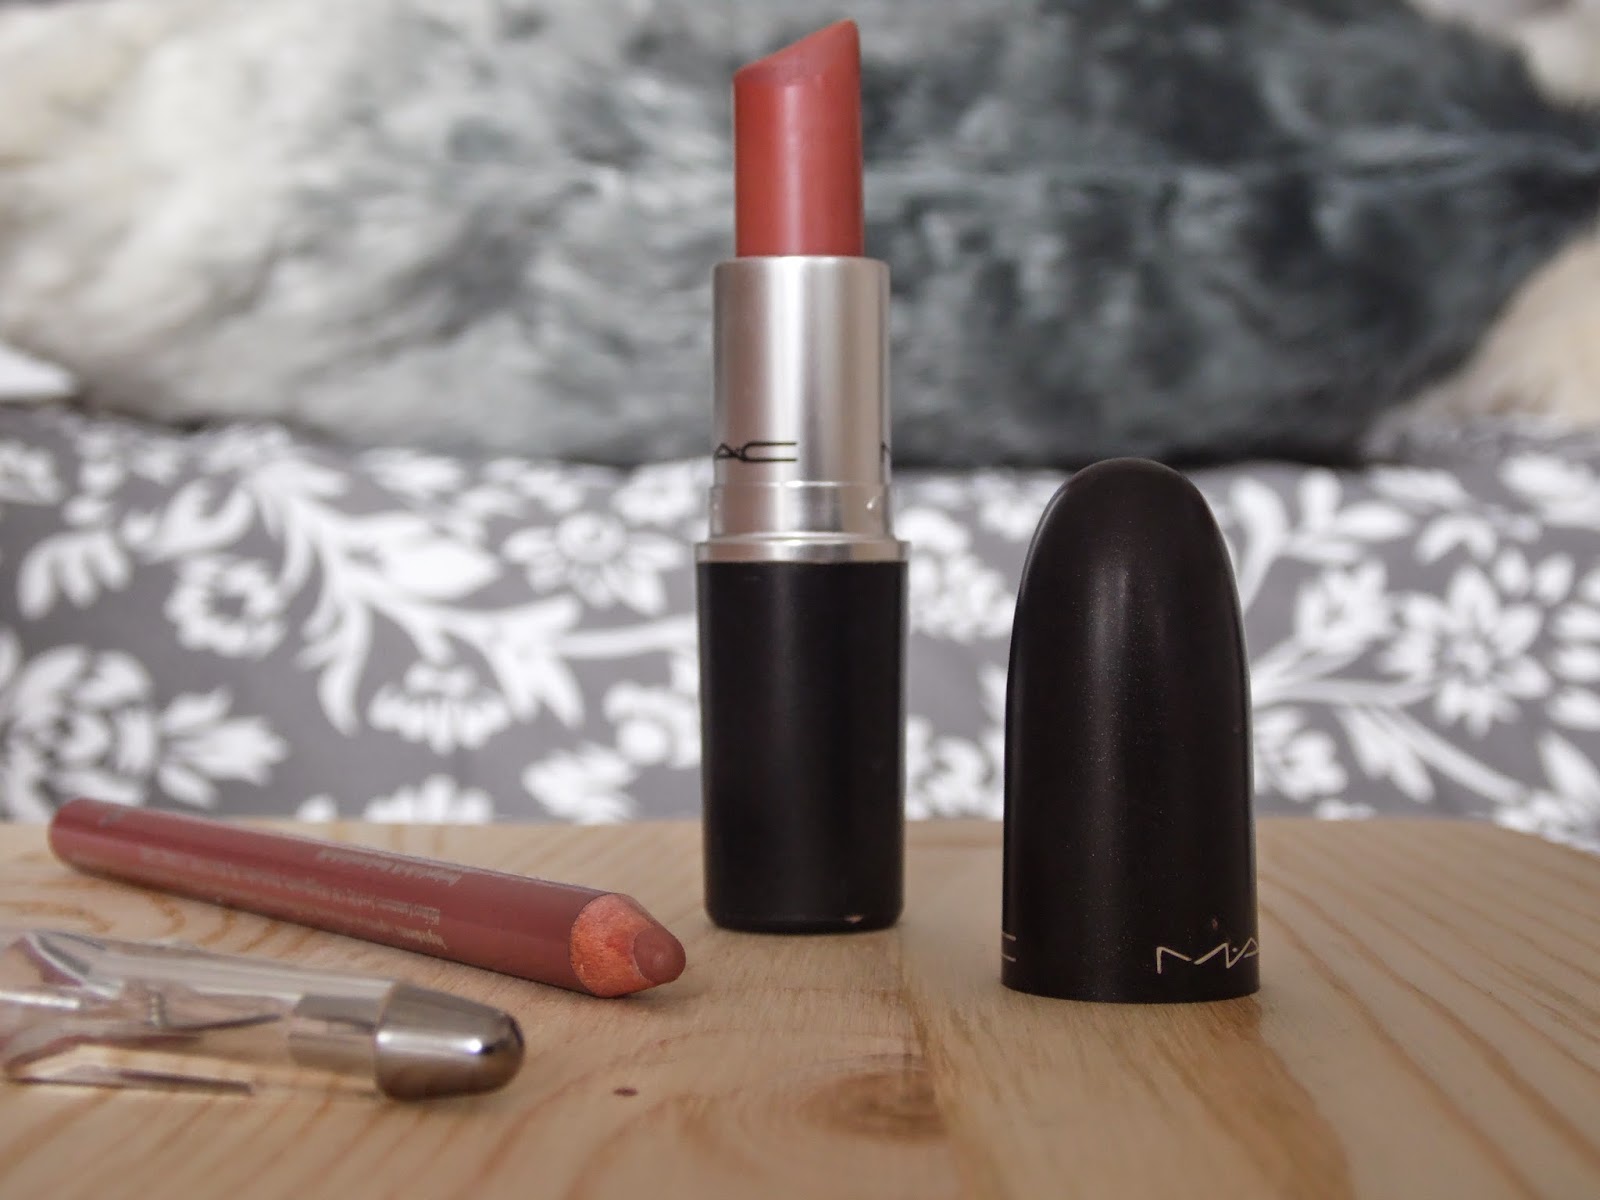 Mac lipstick next to lipliner